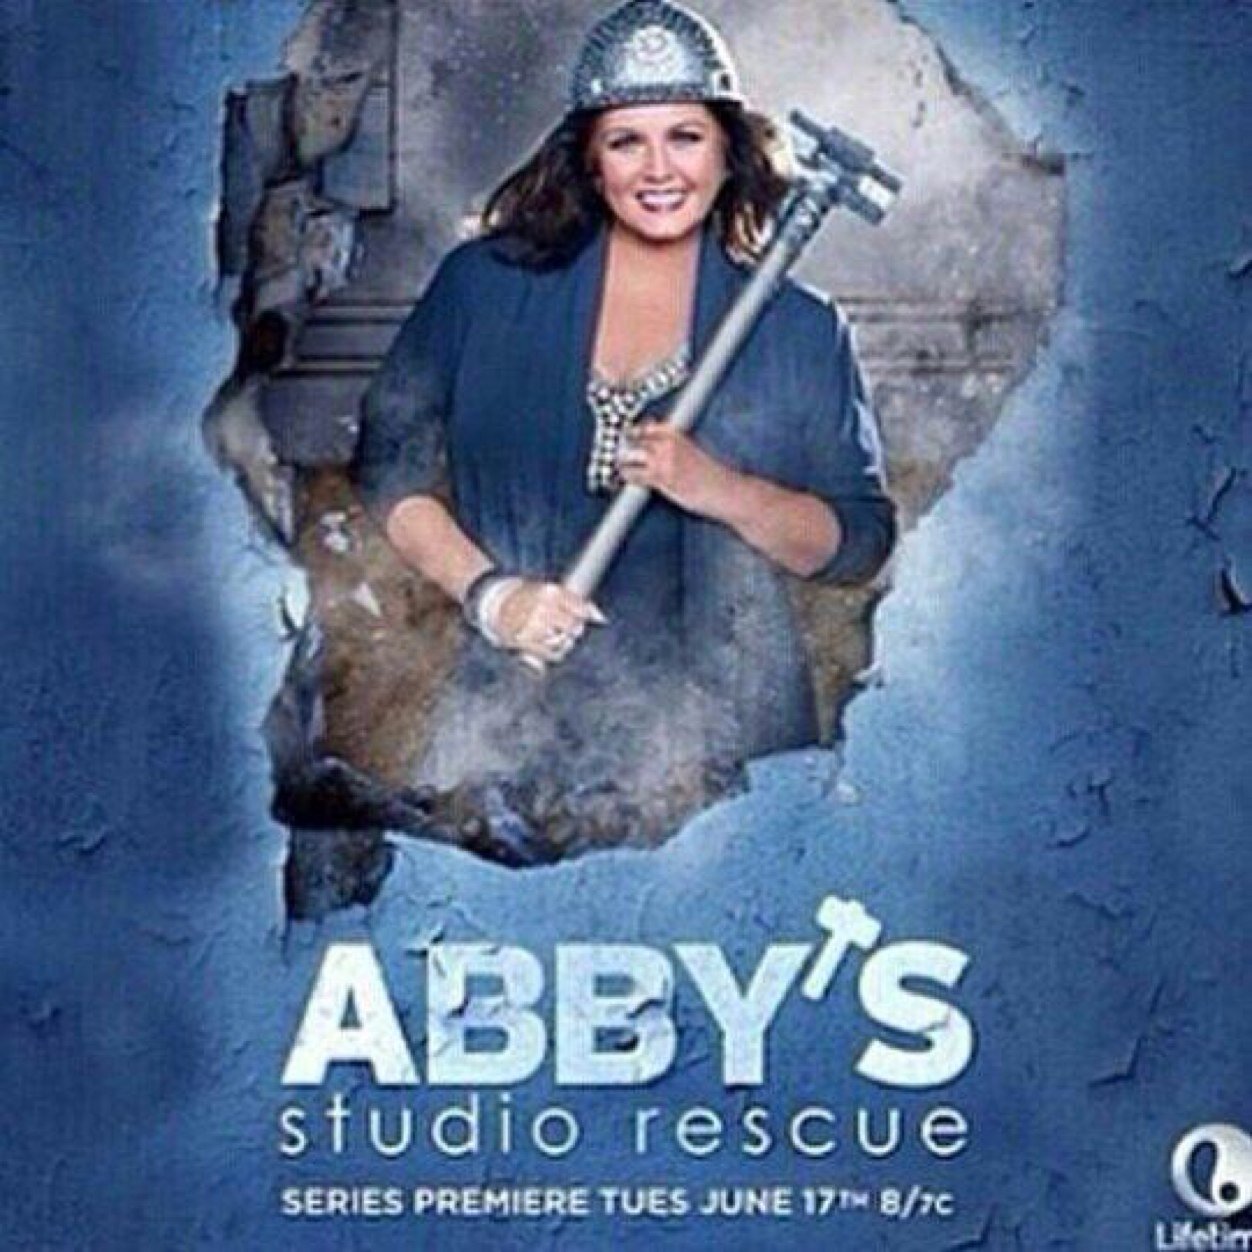 Abby's Studio Rescue premieres September 16th!